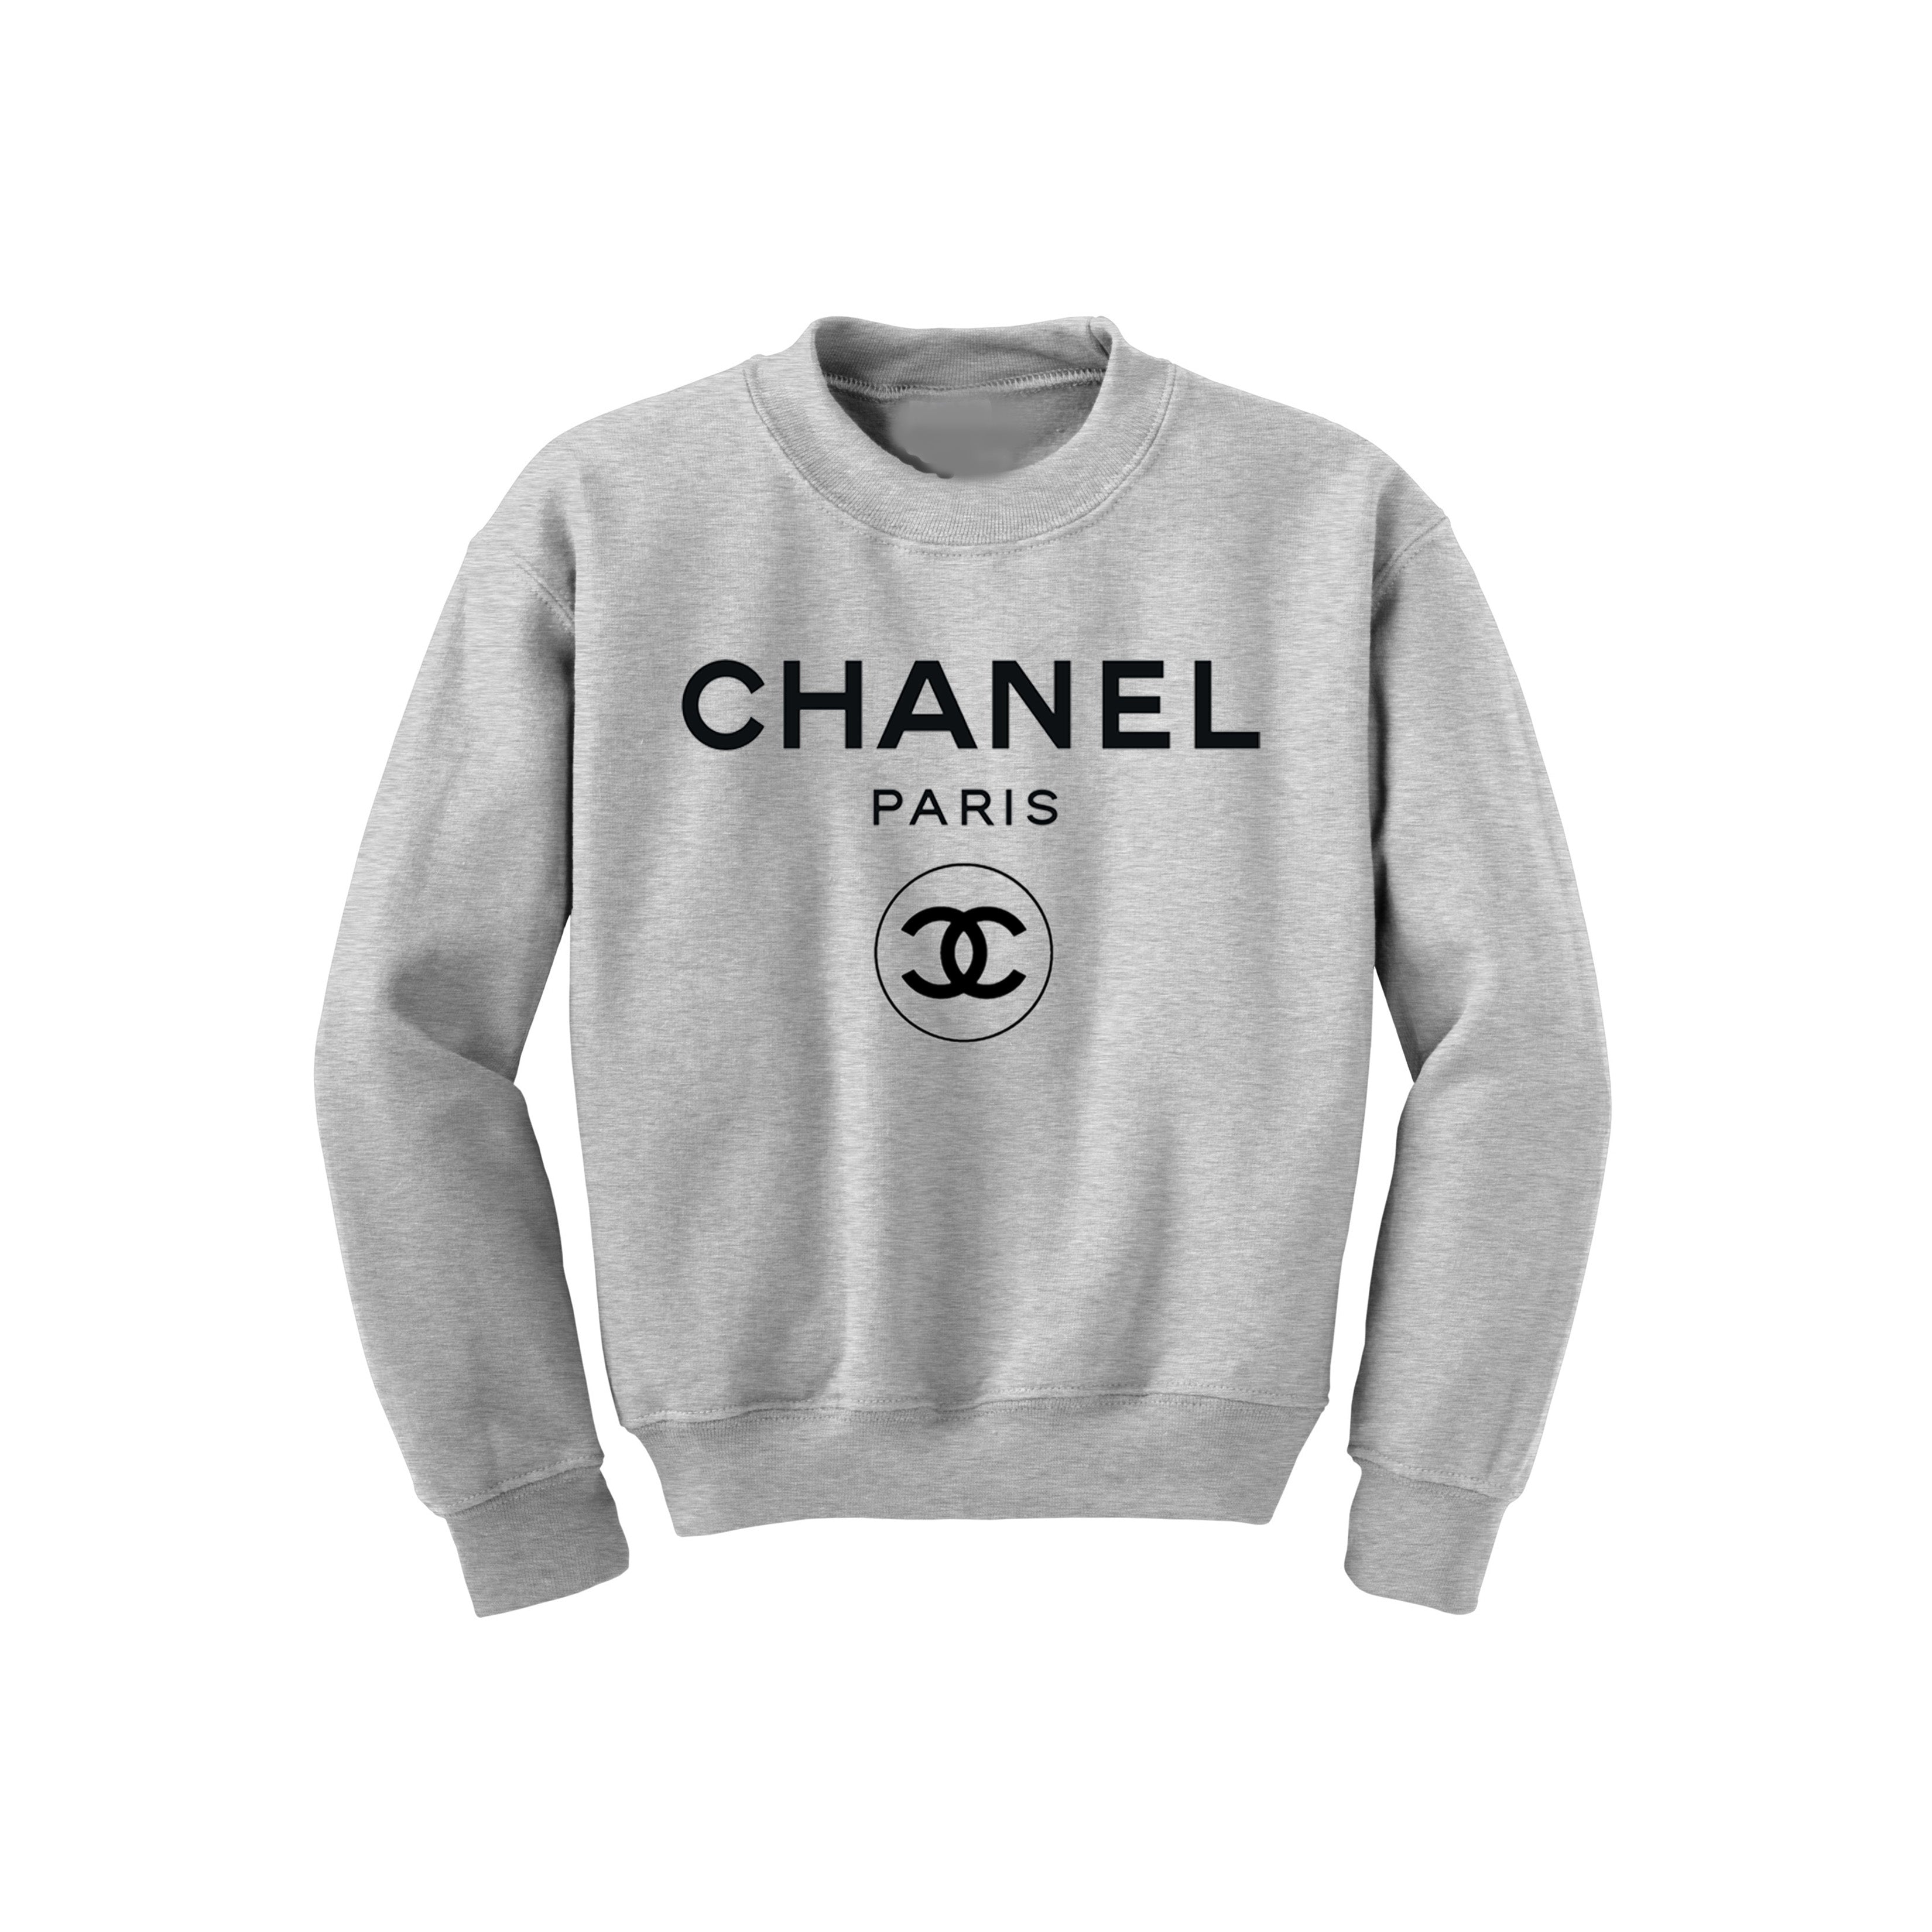 Chanel sweatshirt Slouchy CC womens PINK sweatshirt by GetCustom, $24.97